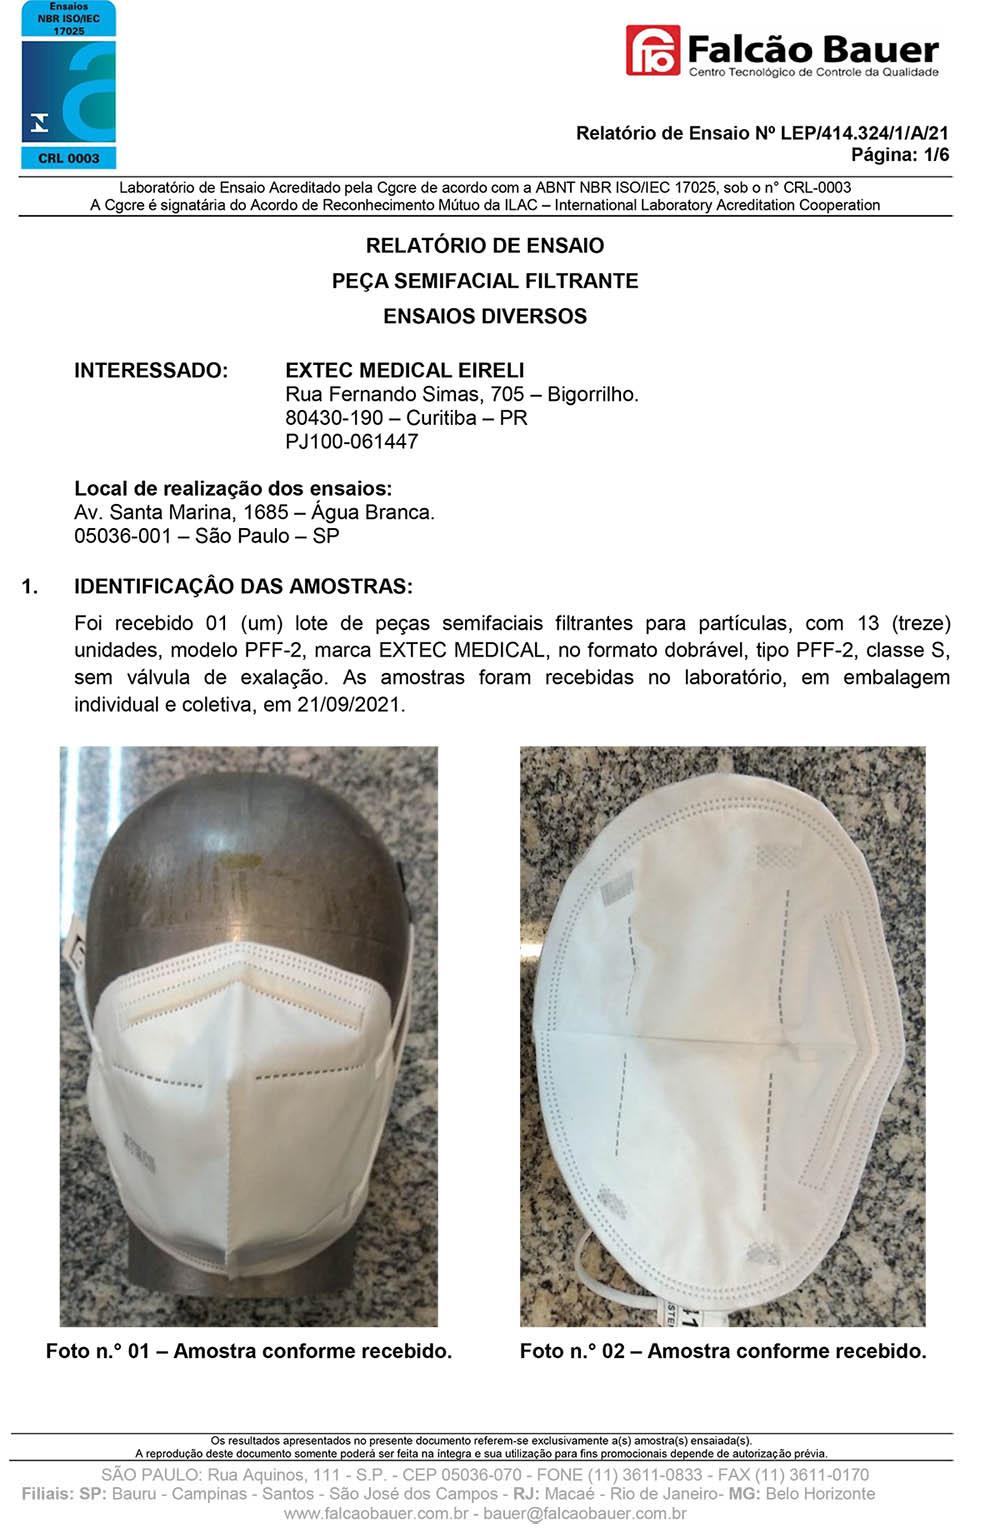 Máscara PFF2 / N95 / KN95 adulto pink - pacote 50 unidades 5 camadas duplo meltblow BFE 98% + feltro de coton + tnt spunbond hospitalar hipoalergenico